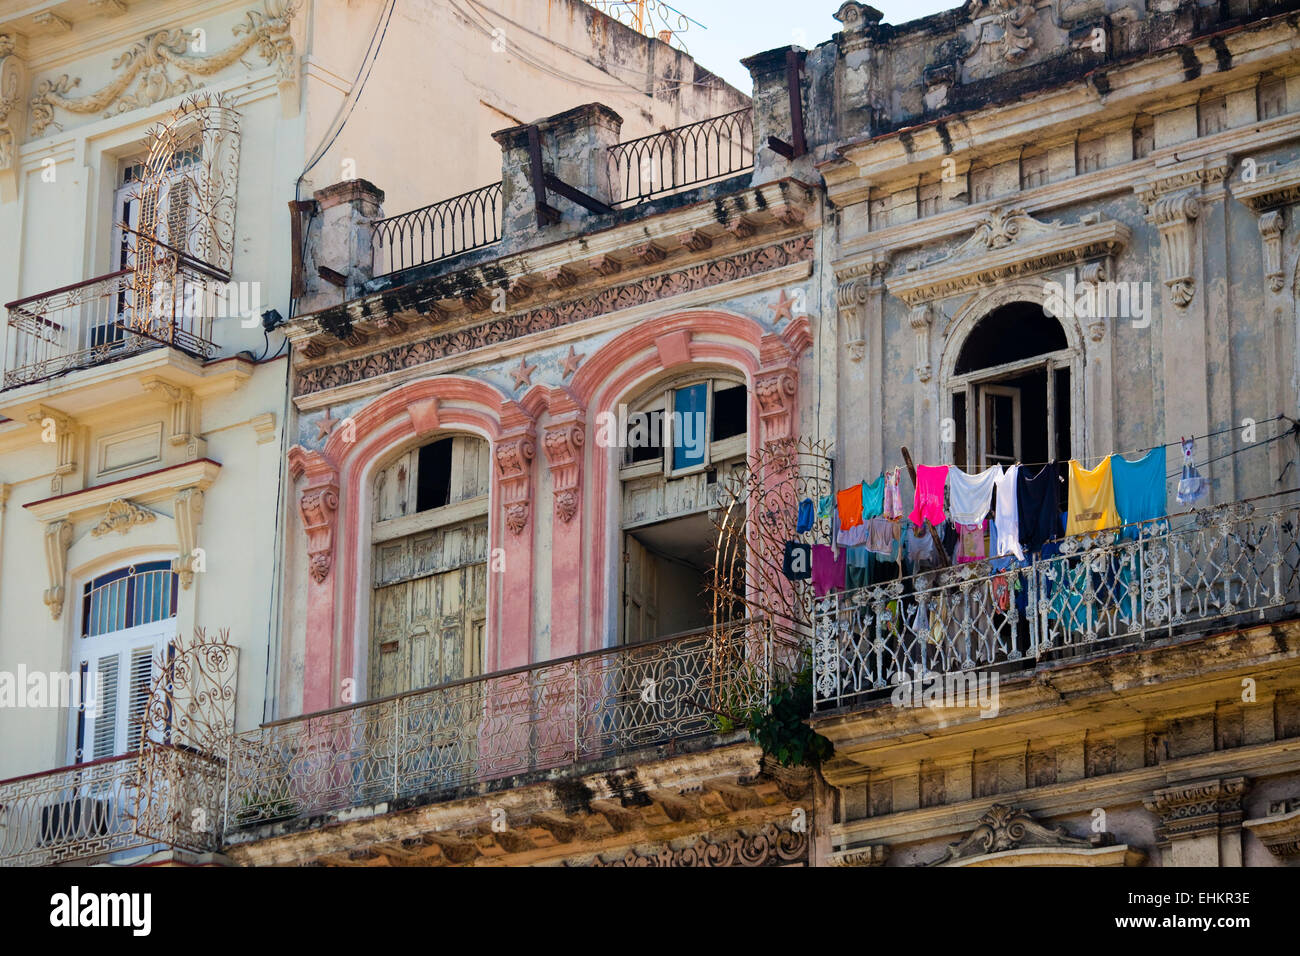 Crumbling old buldings, Old Havana, Cuba Stock Photo